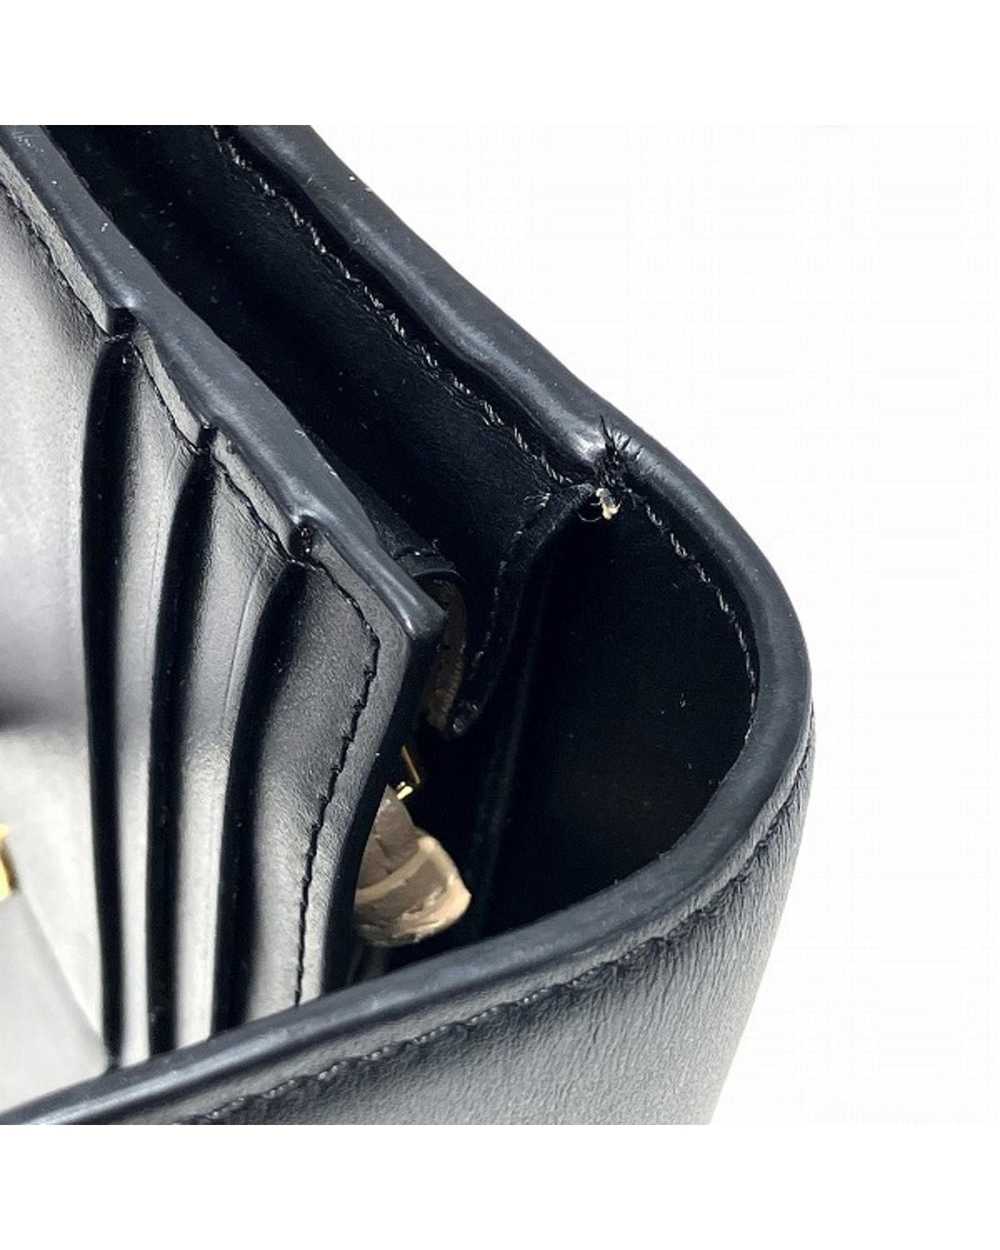 Chloe Refined Black Leather Long Wallet for Women - image 3